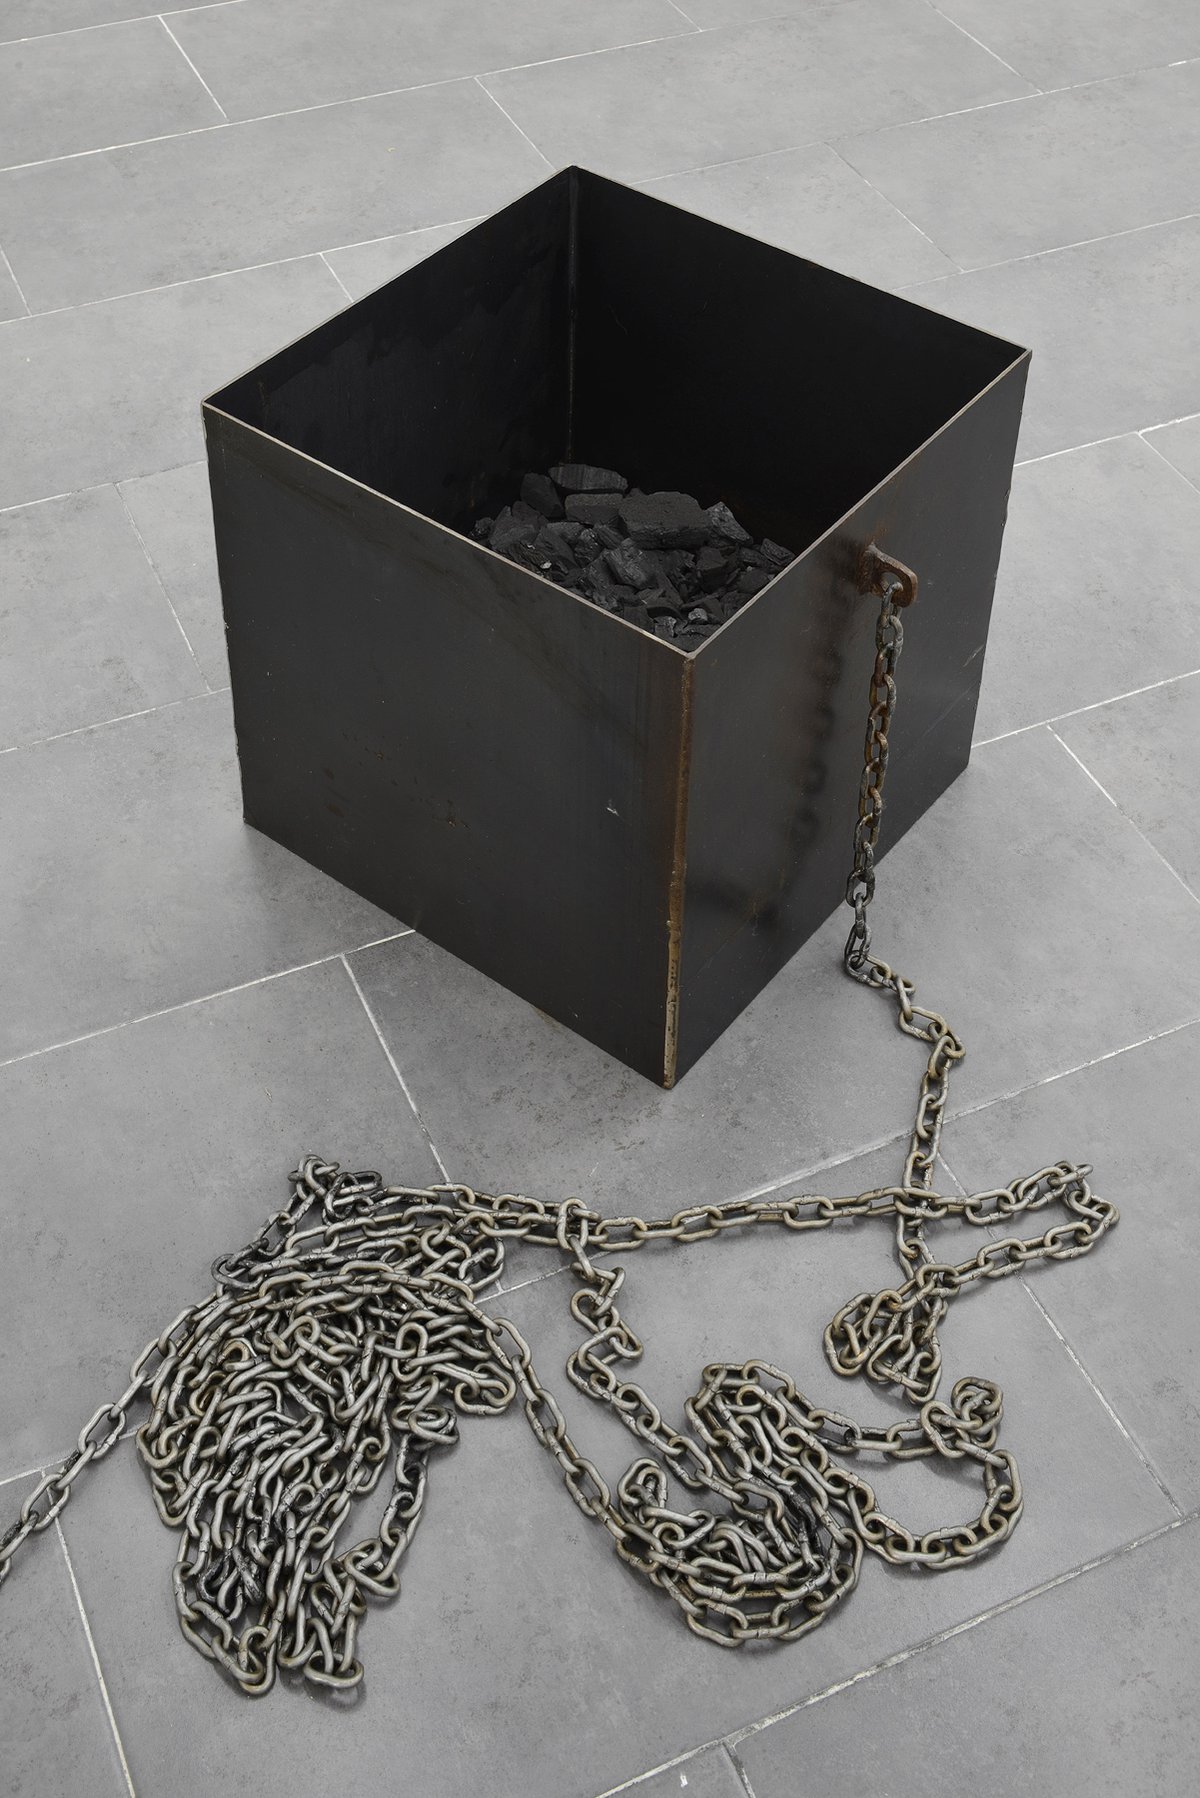 Anna-Sophie BergerGrace, 2017Steel, coals40 × 40 × 40 cm